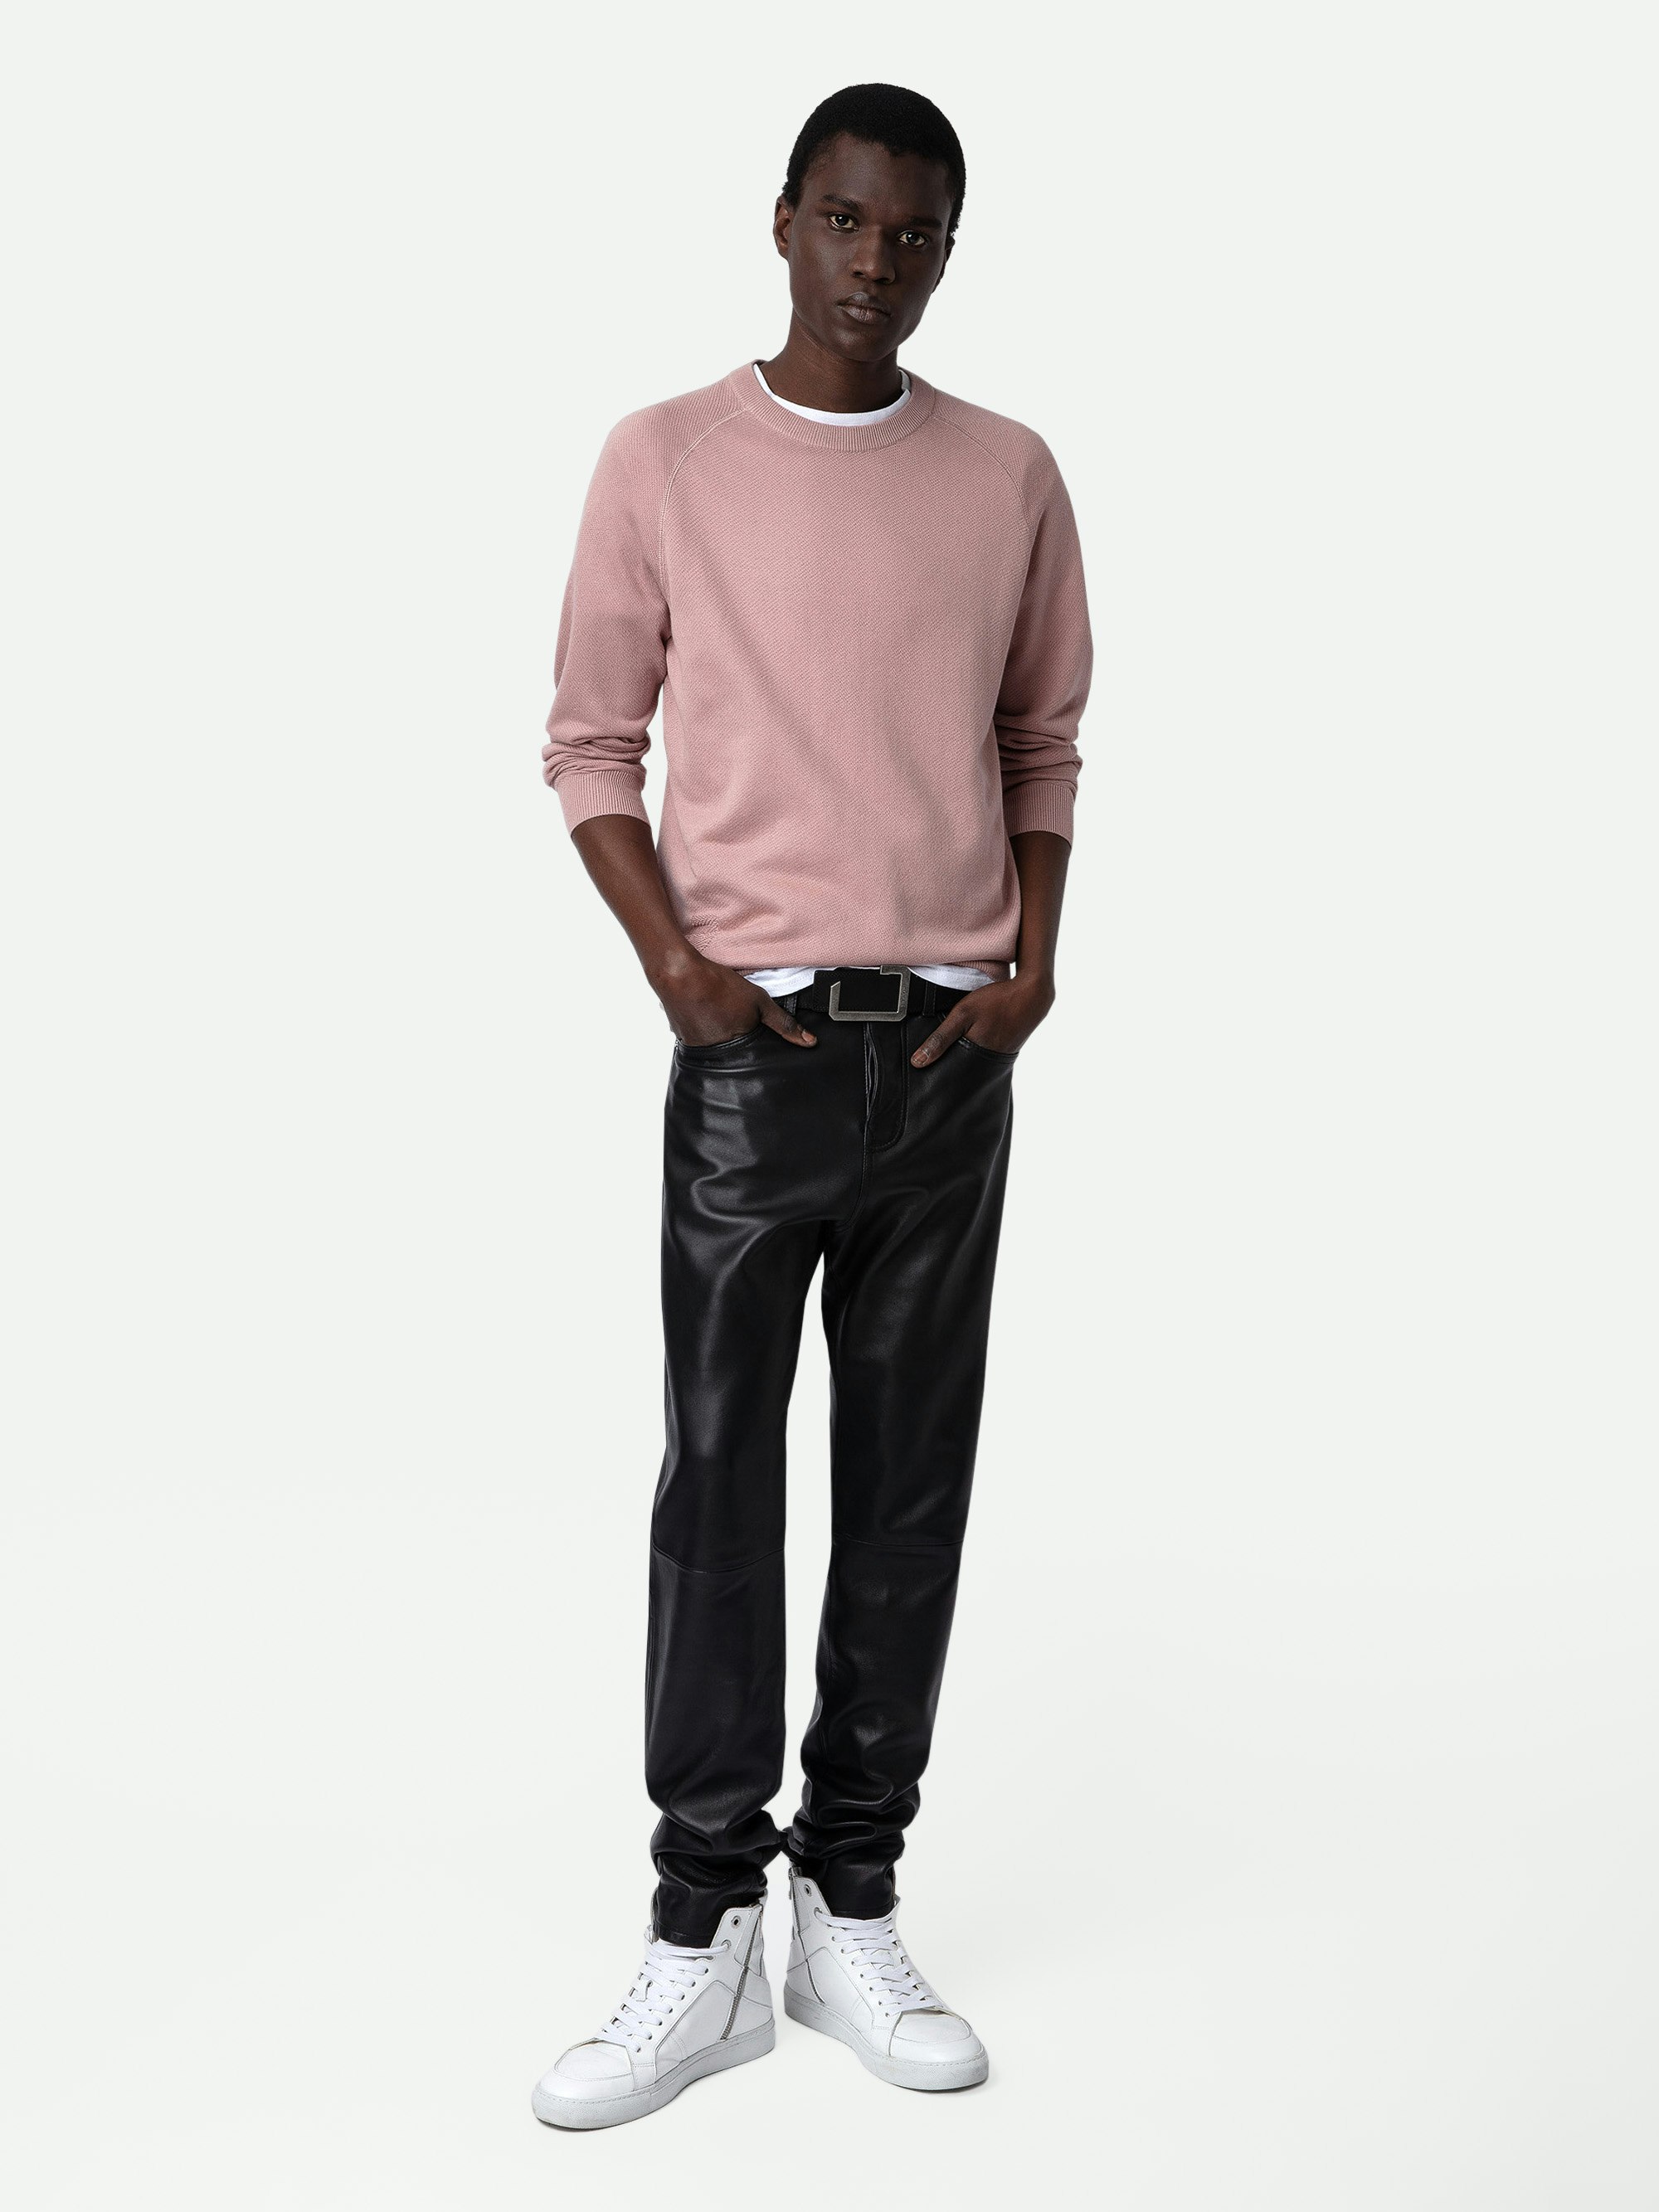 Thomaso Jumper - Pink long-sleeved sweatshirt with signature.